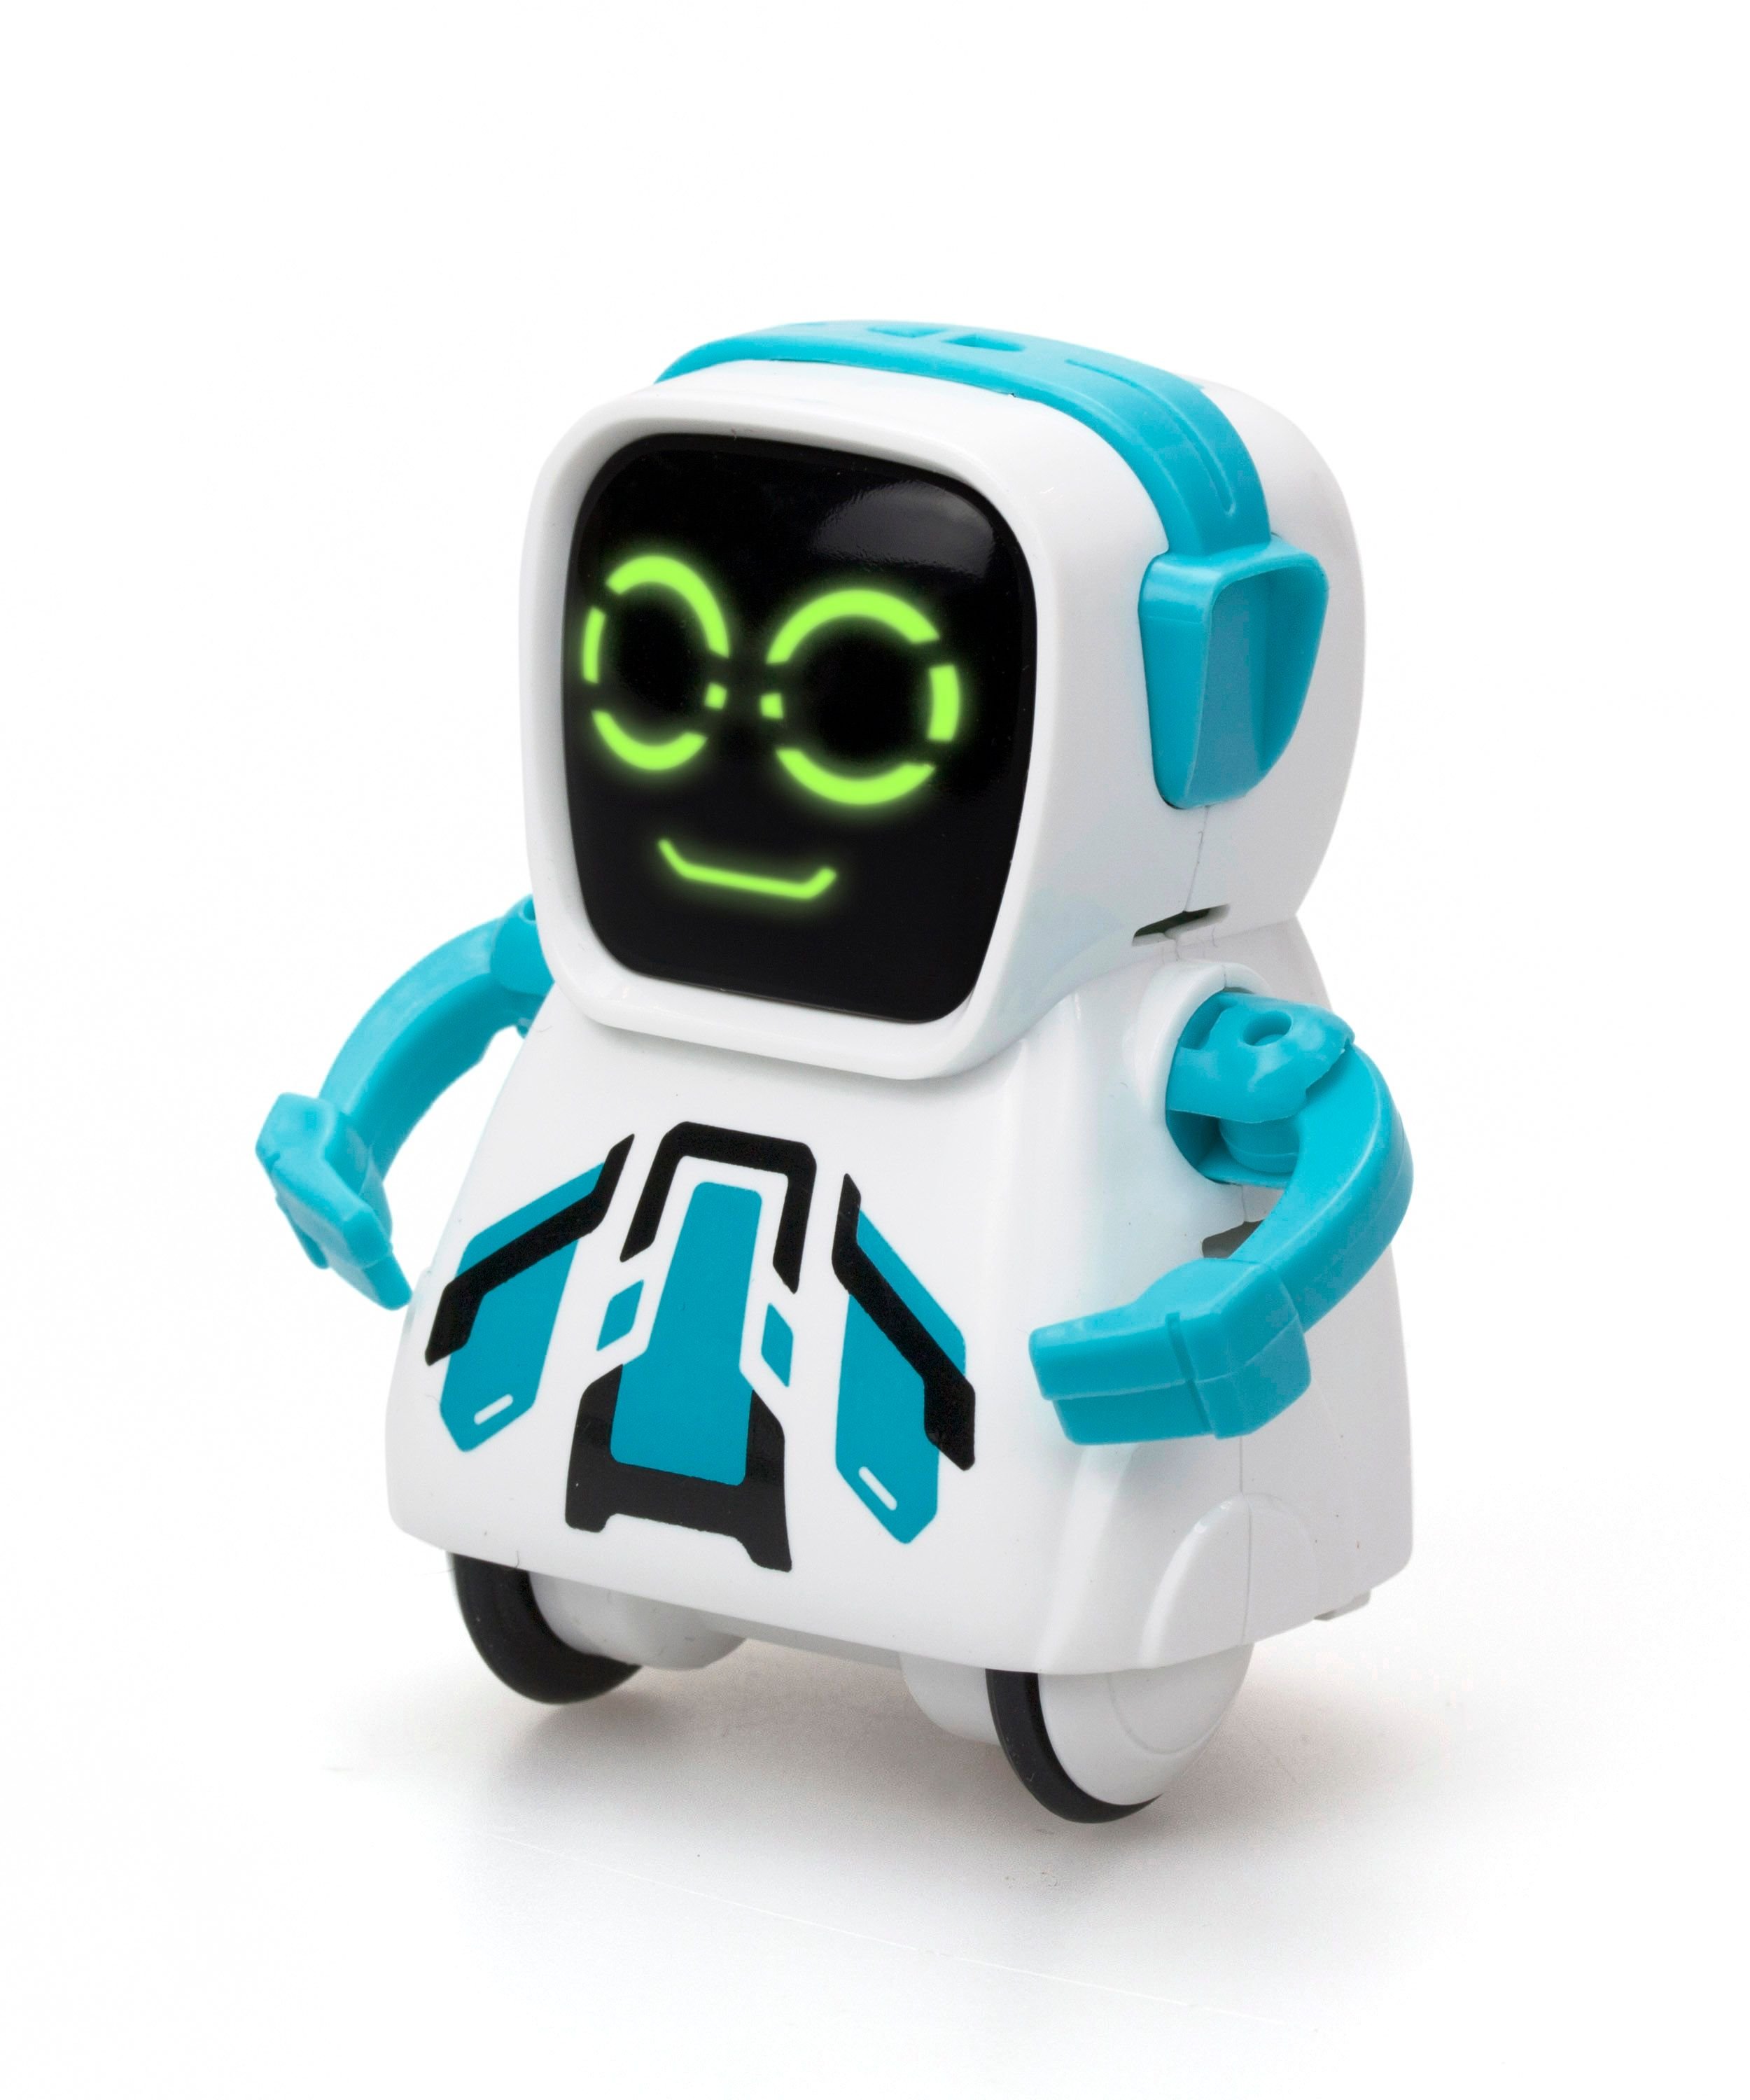 Silverlit - Pokibot Square Robot - Blue